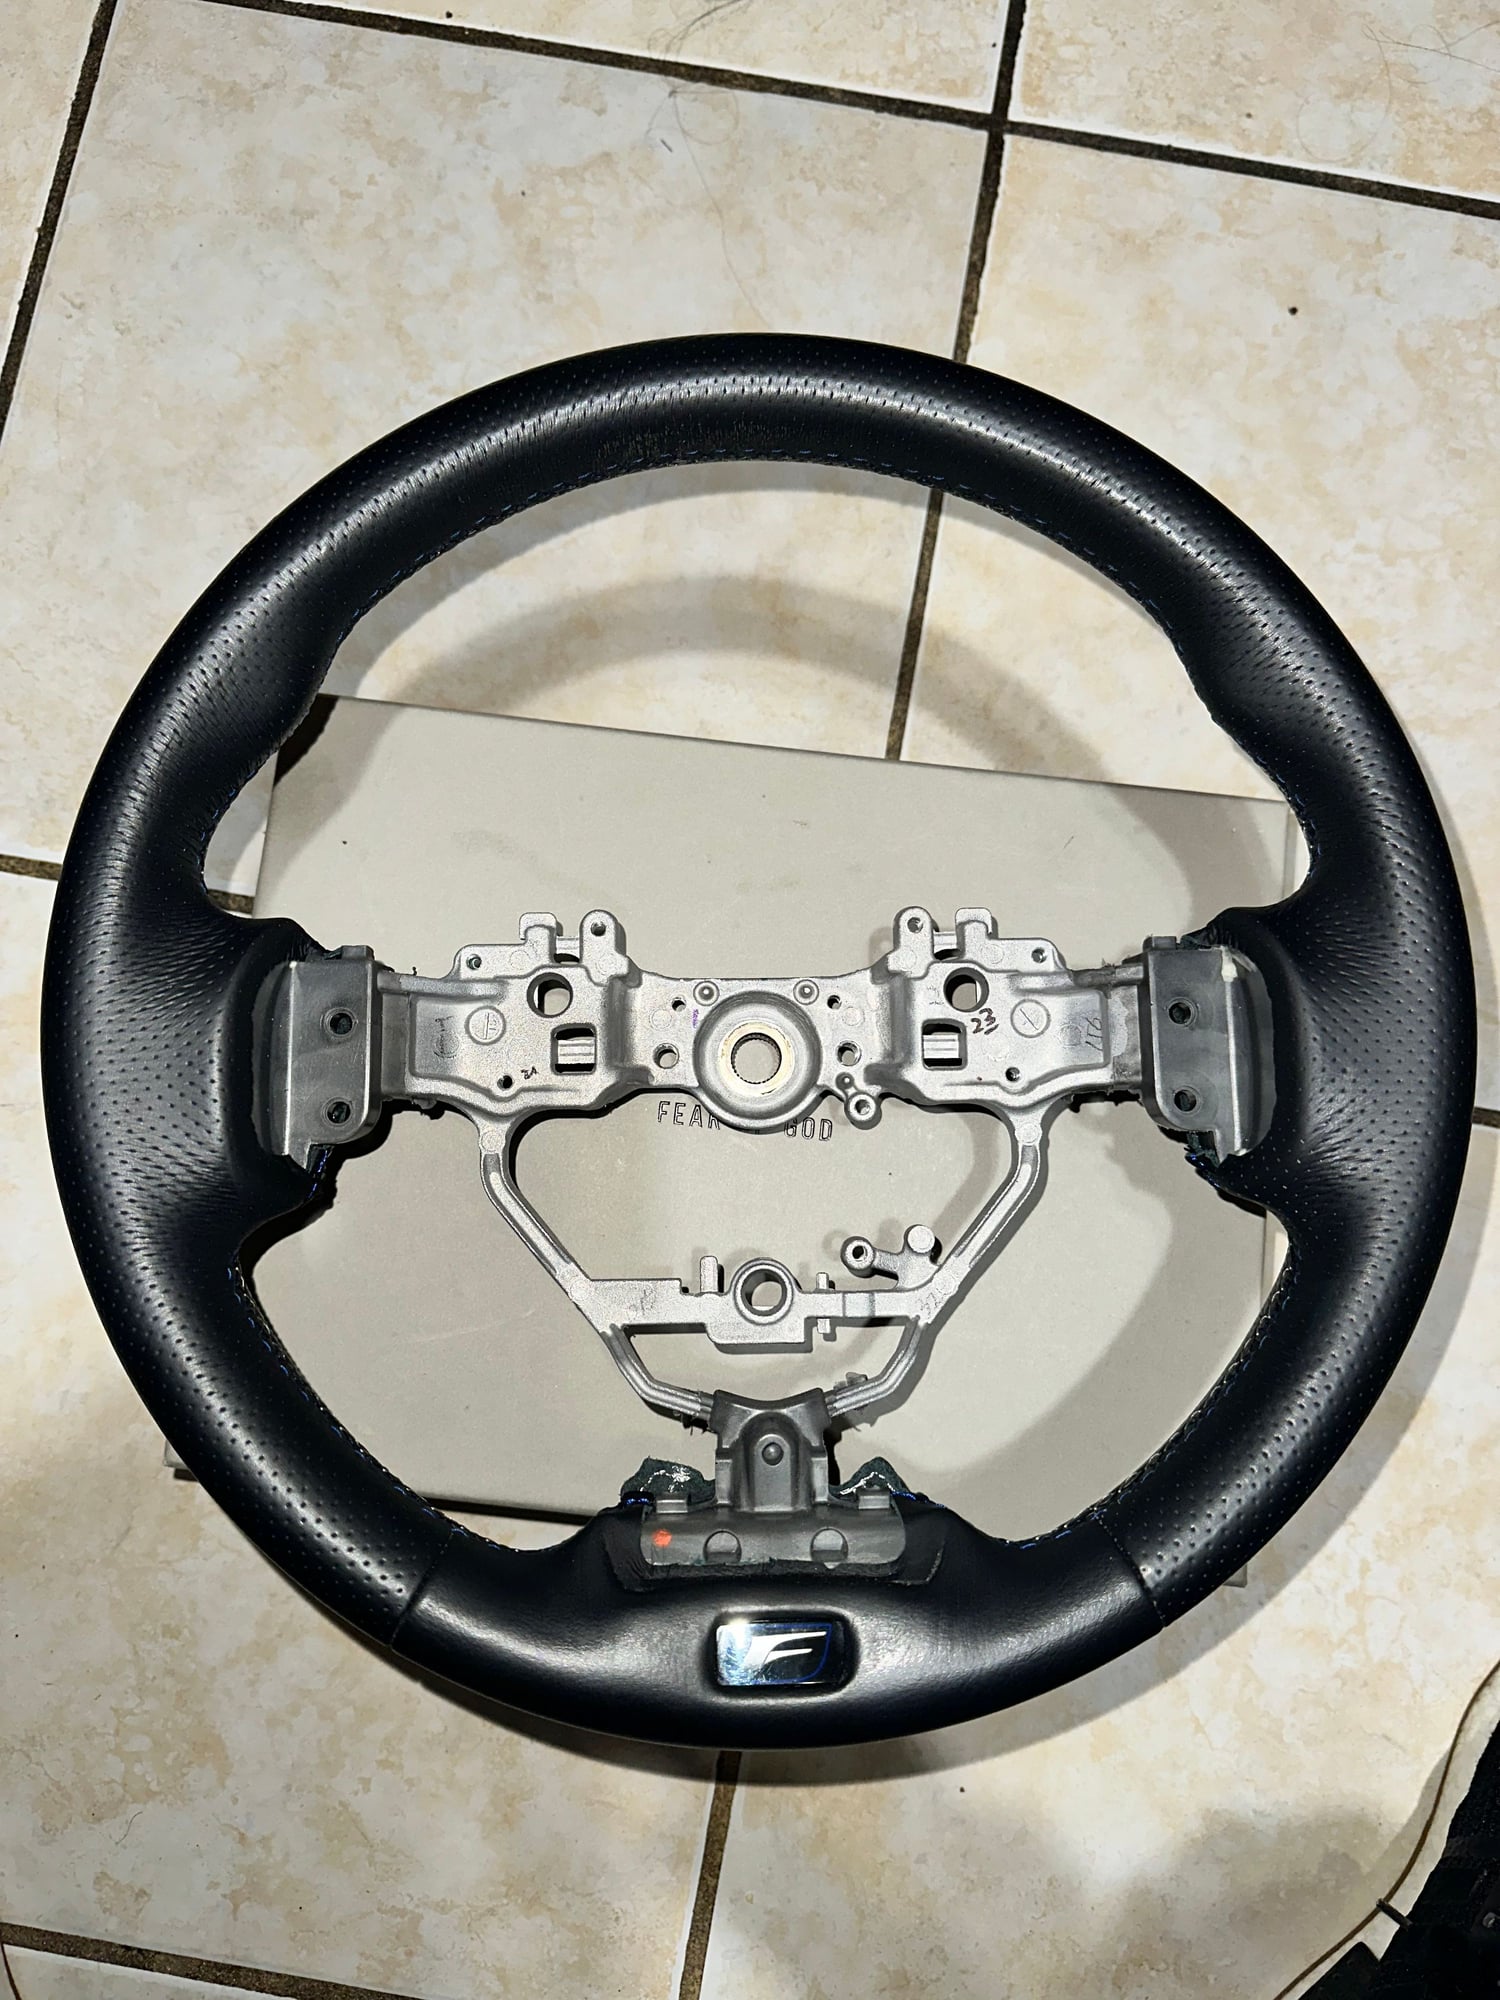 Steering/Suspension - 2016 GSF oem steering wheel - Used - Richmond, TX 77406, United States